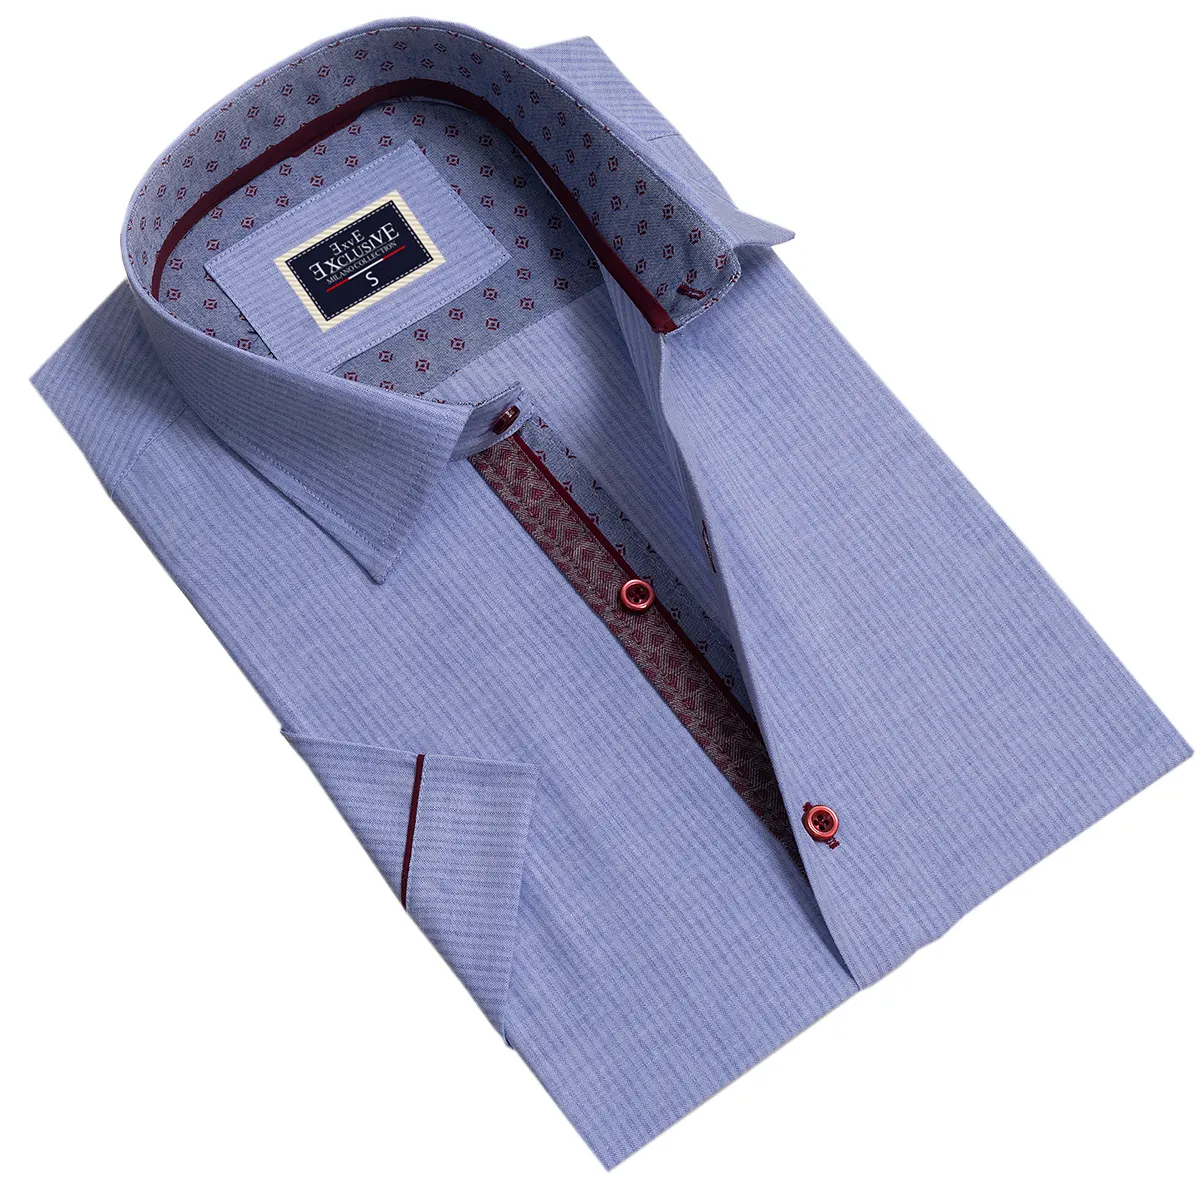 New style cotob fiber shirt men's shirt solid color elastic non-iron men's dress shirts made in turkey